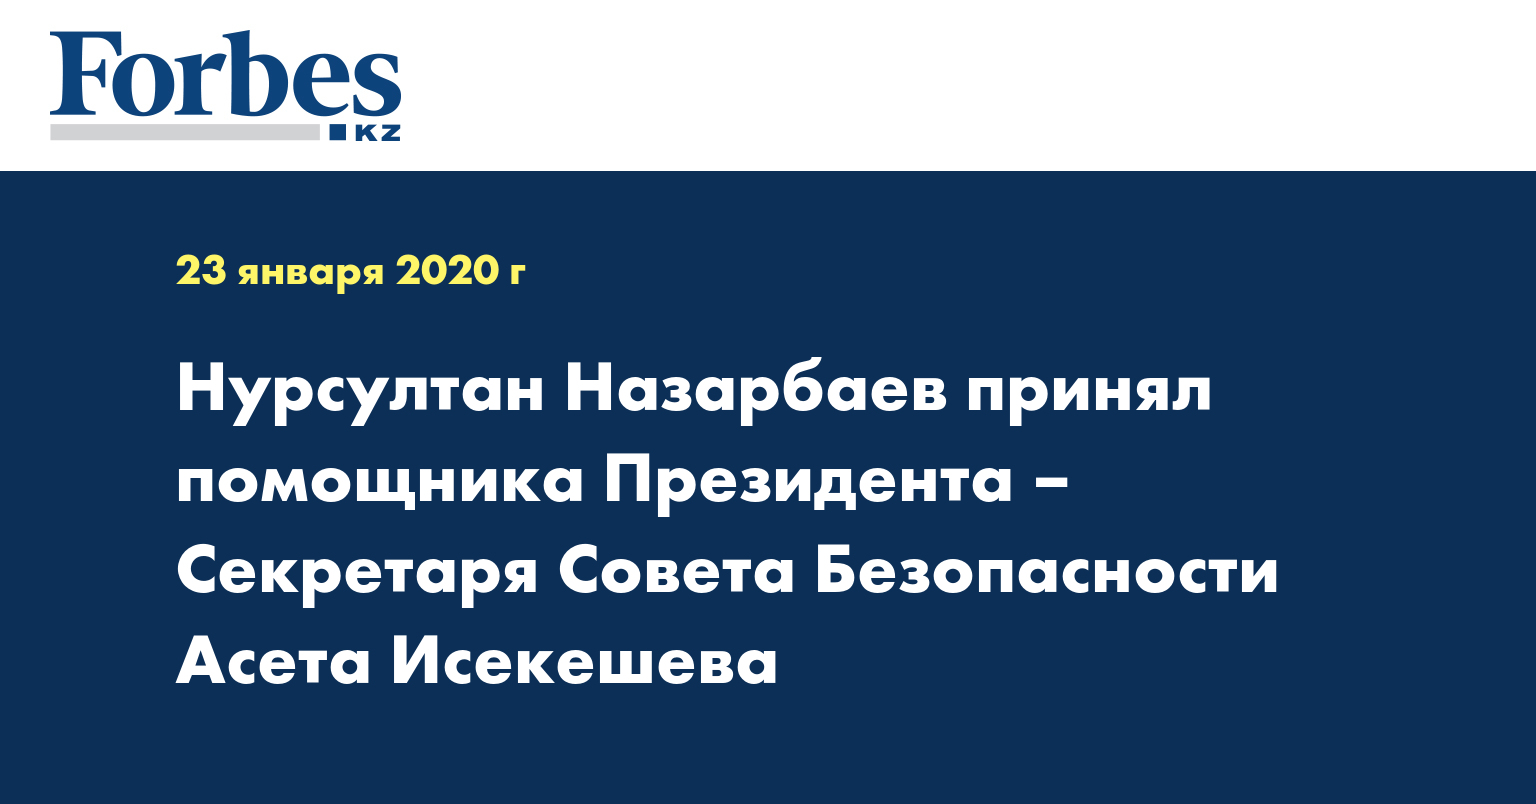 Нурсултан Назарбаев принял помощника Президента – Секретаря Совета Безопасности Асета Исекешева